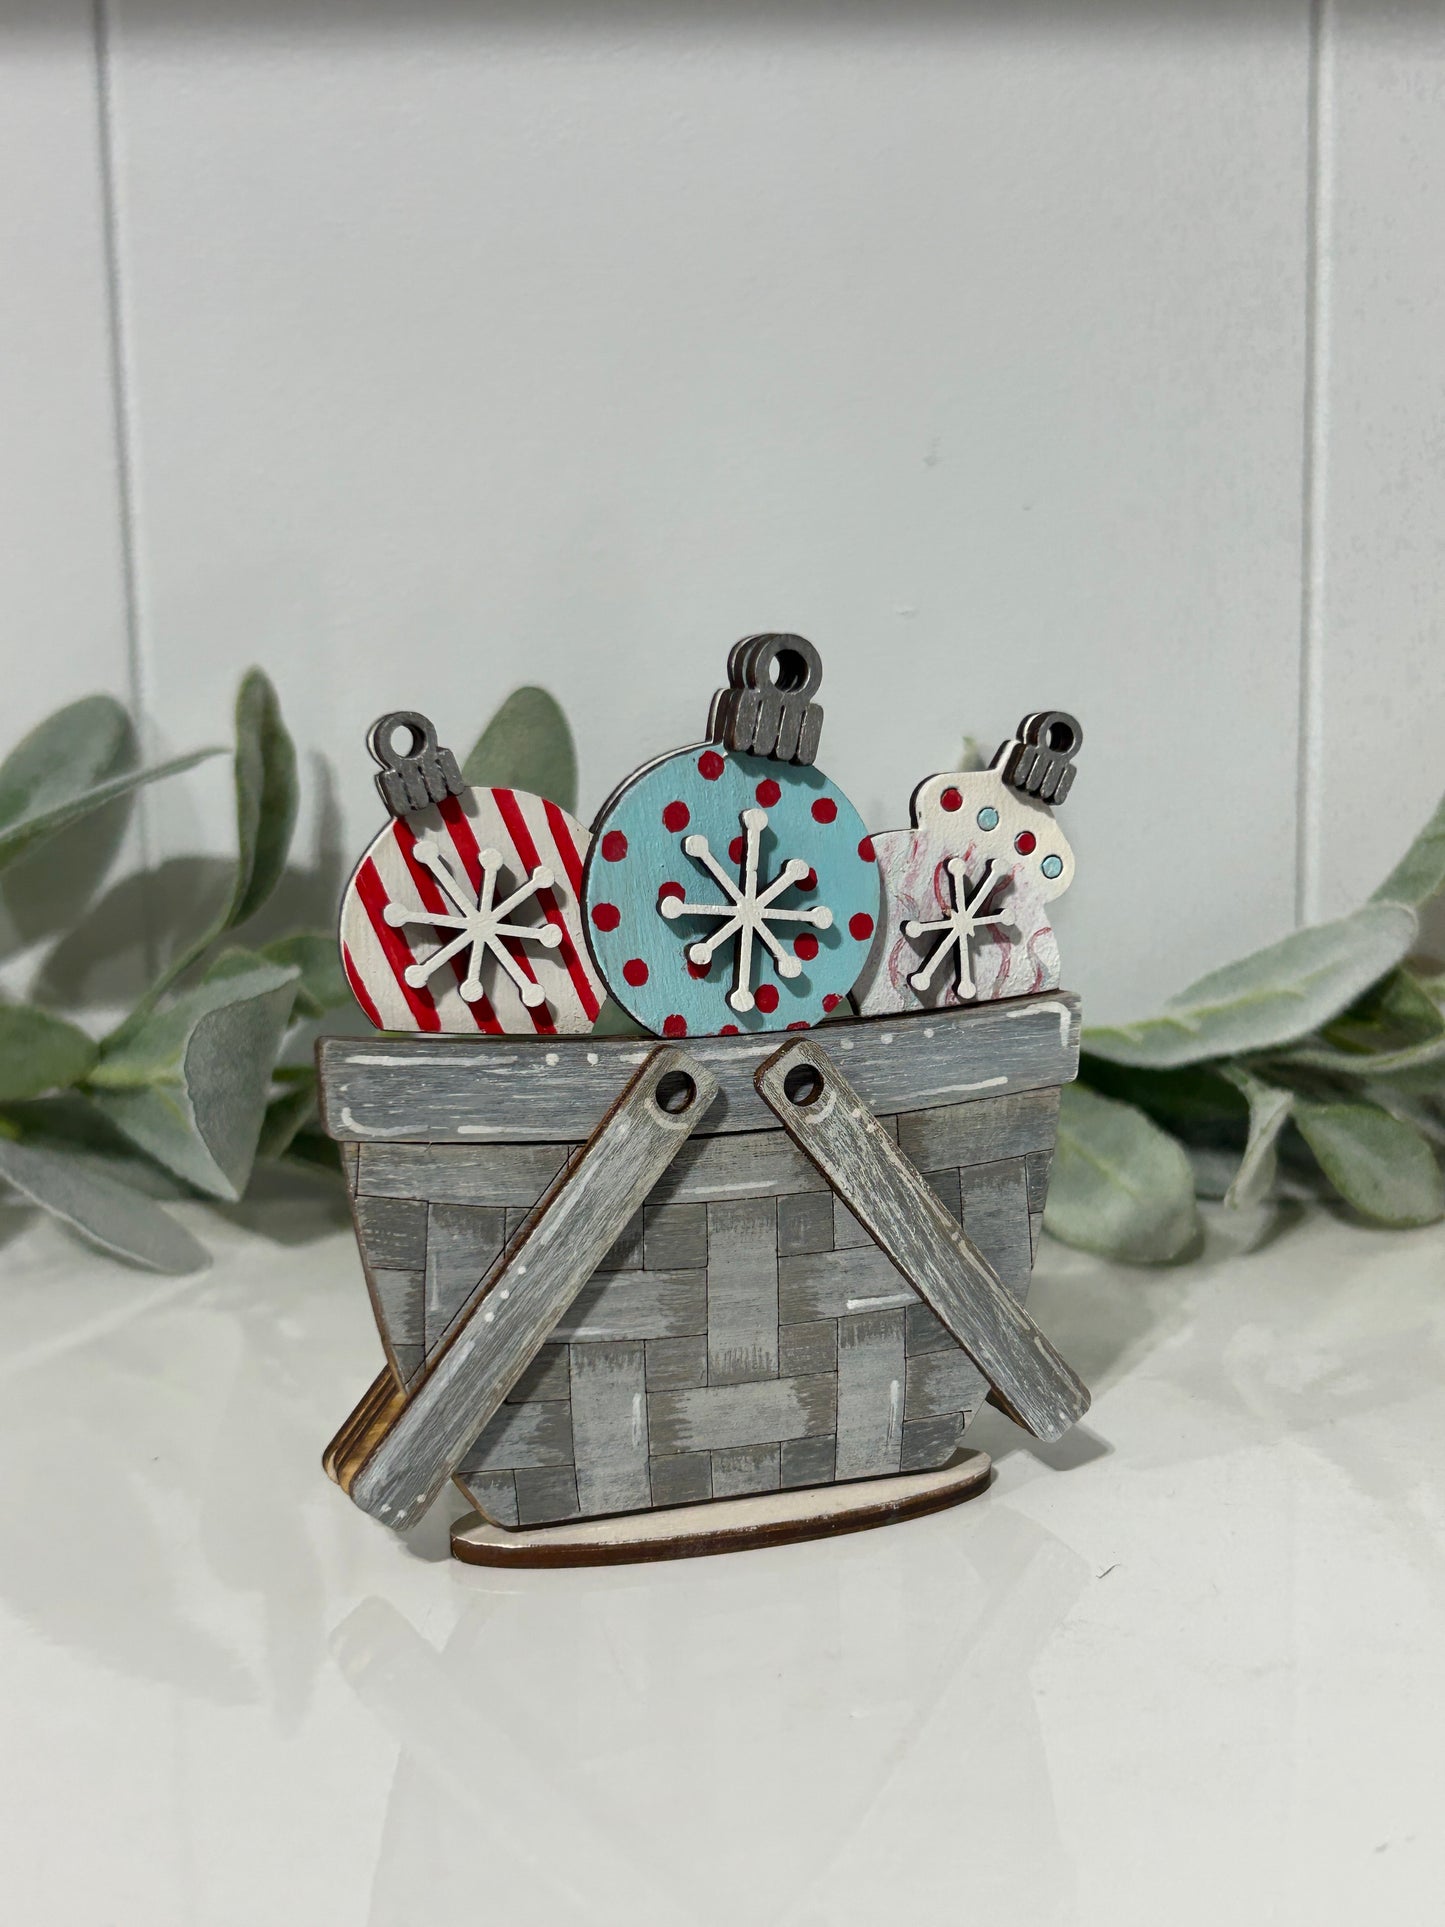 Seasonal Mini Wooden Basket - Interchangeable -  DIY Kit